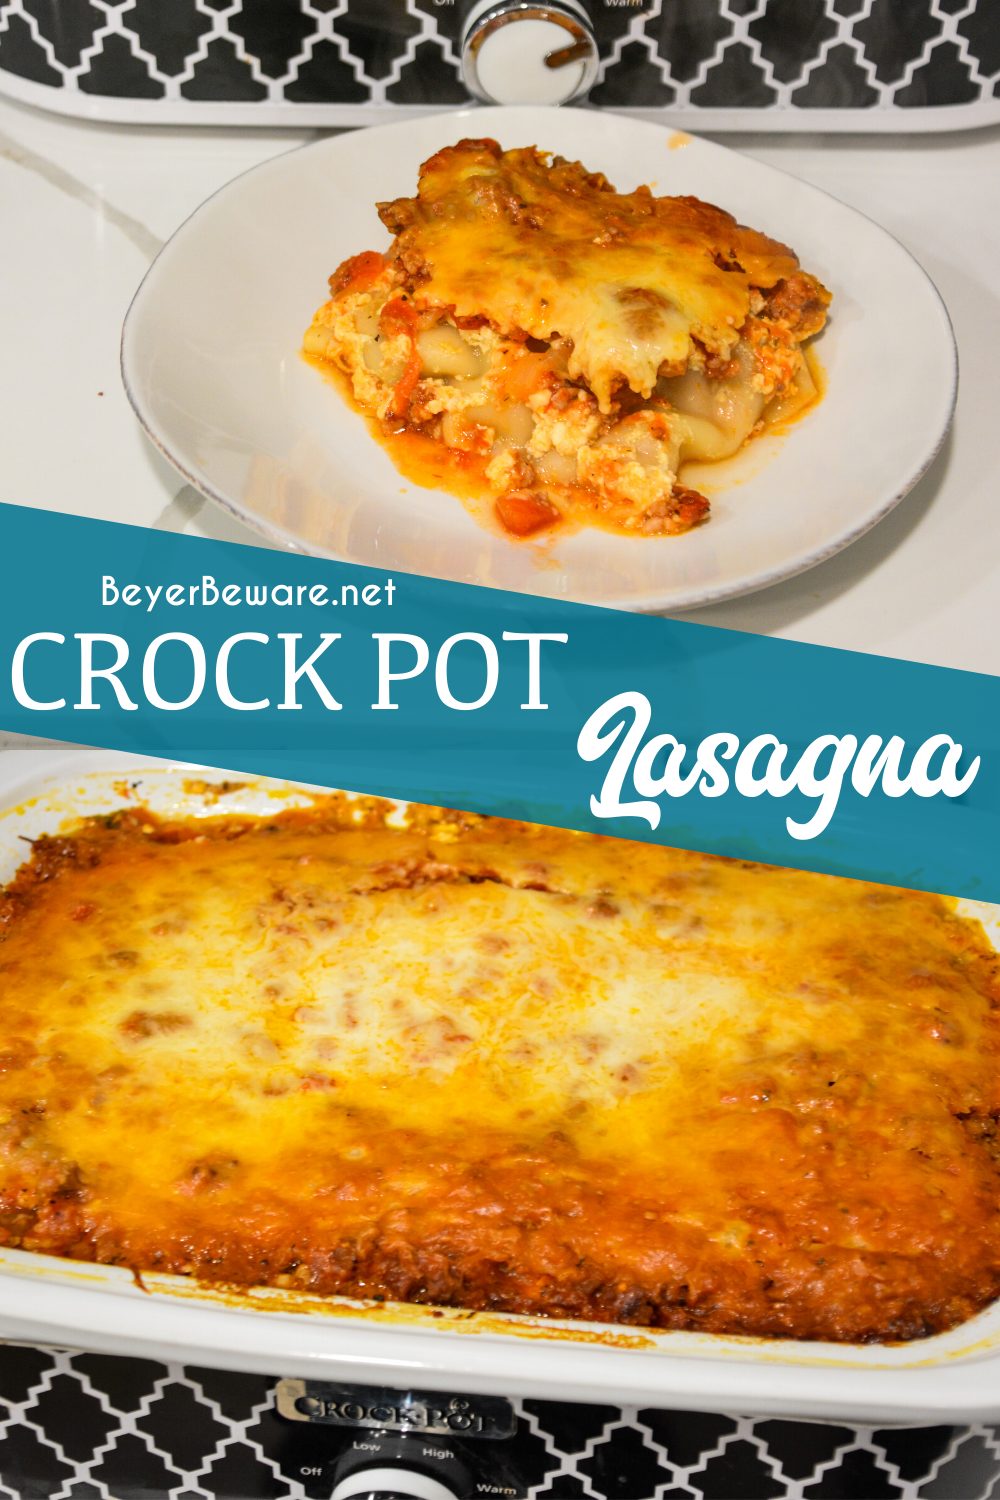 Crock pot lasagna is an easy lasagna recipe using no-boil or regular lasagna noodles that can slow cook in your casserole crock pot all day long.